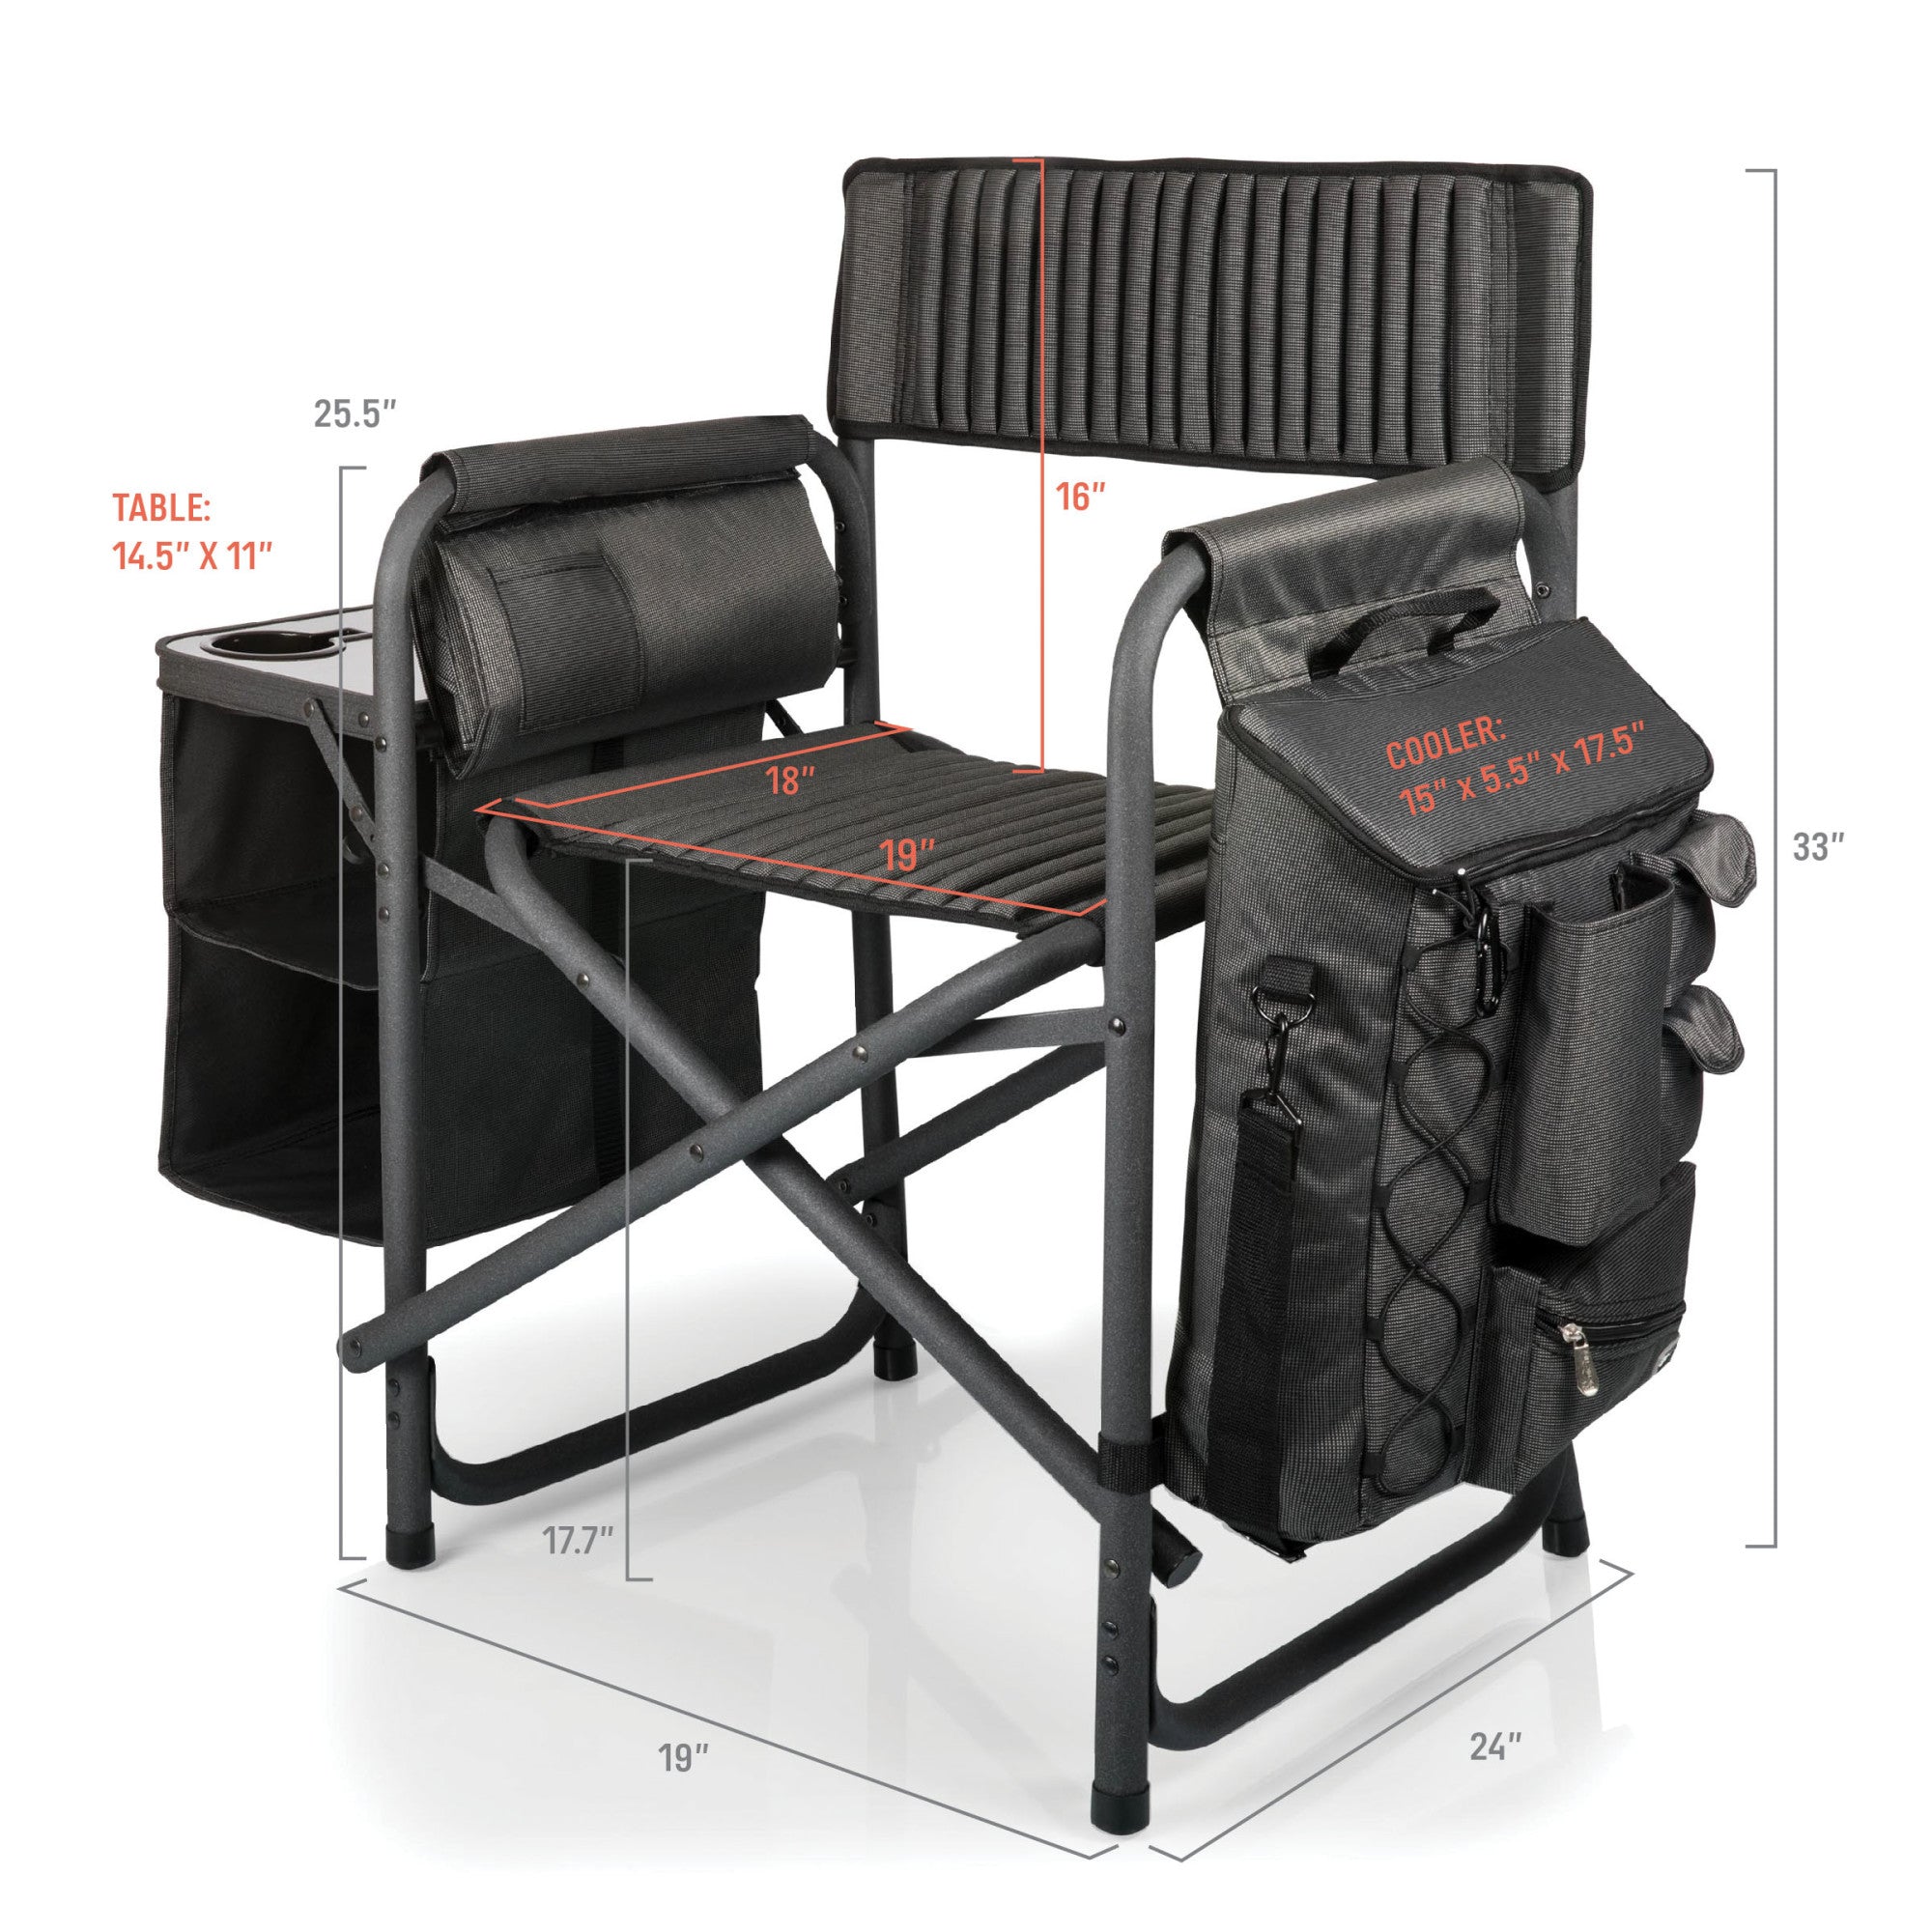 Buffalo Bills - Fusion Camping Chair